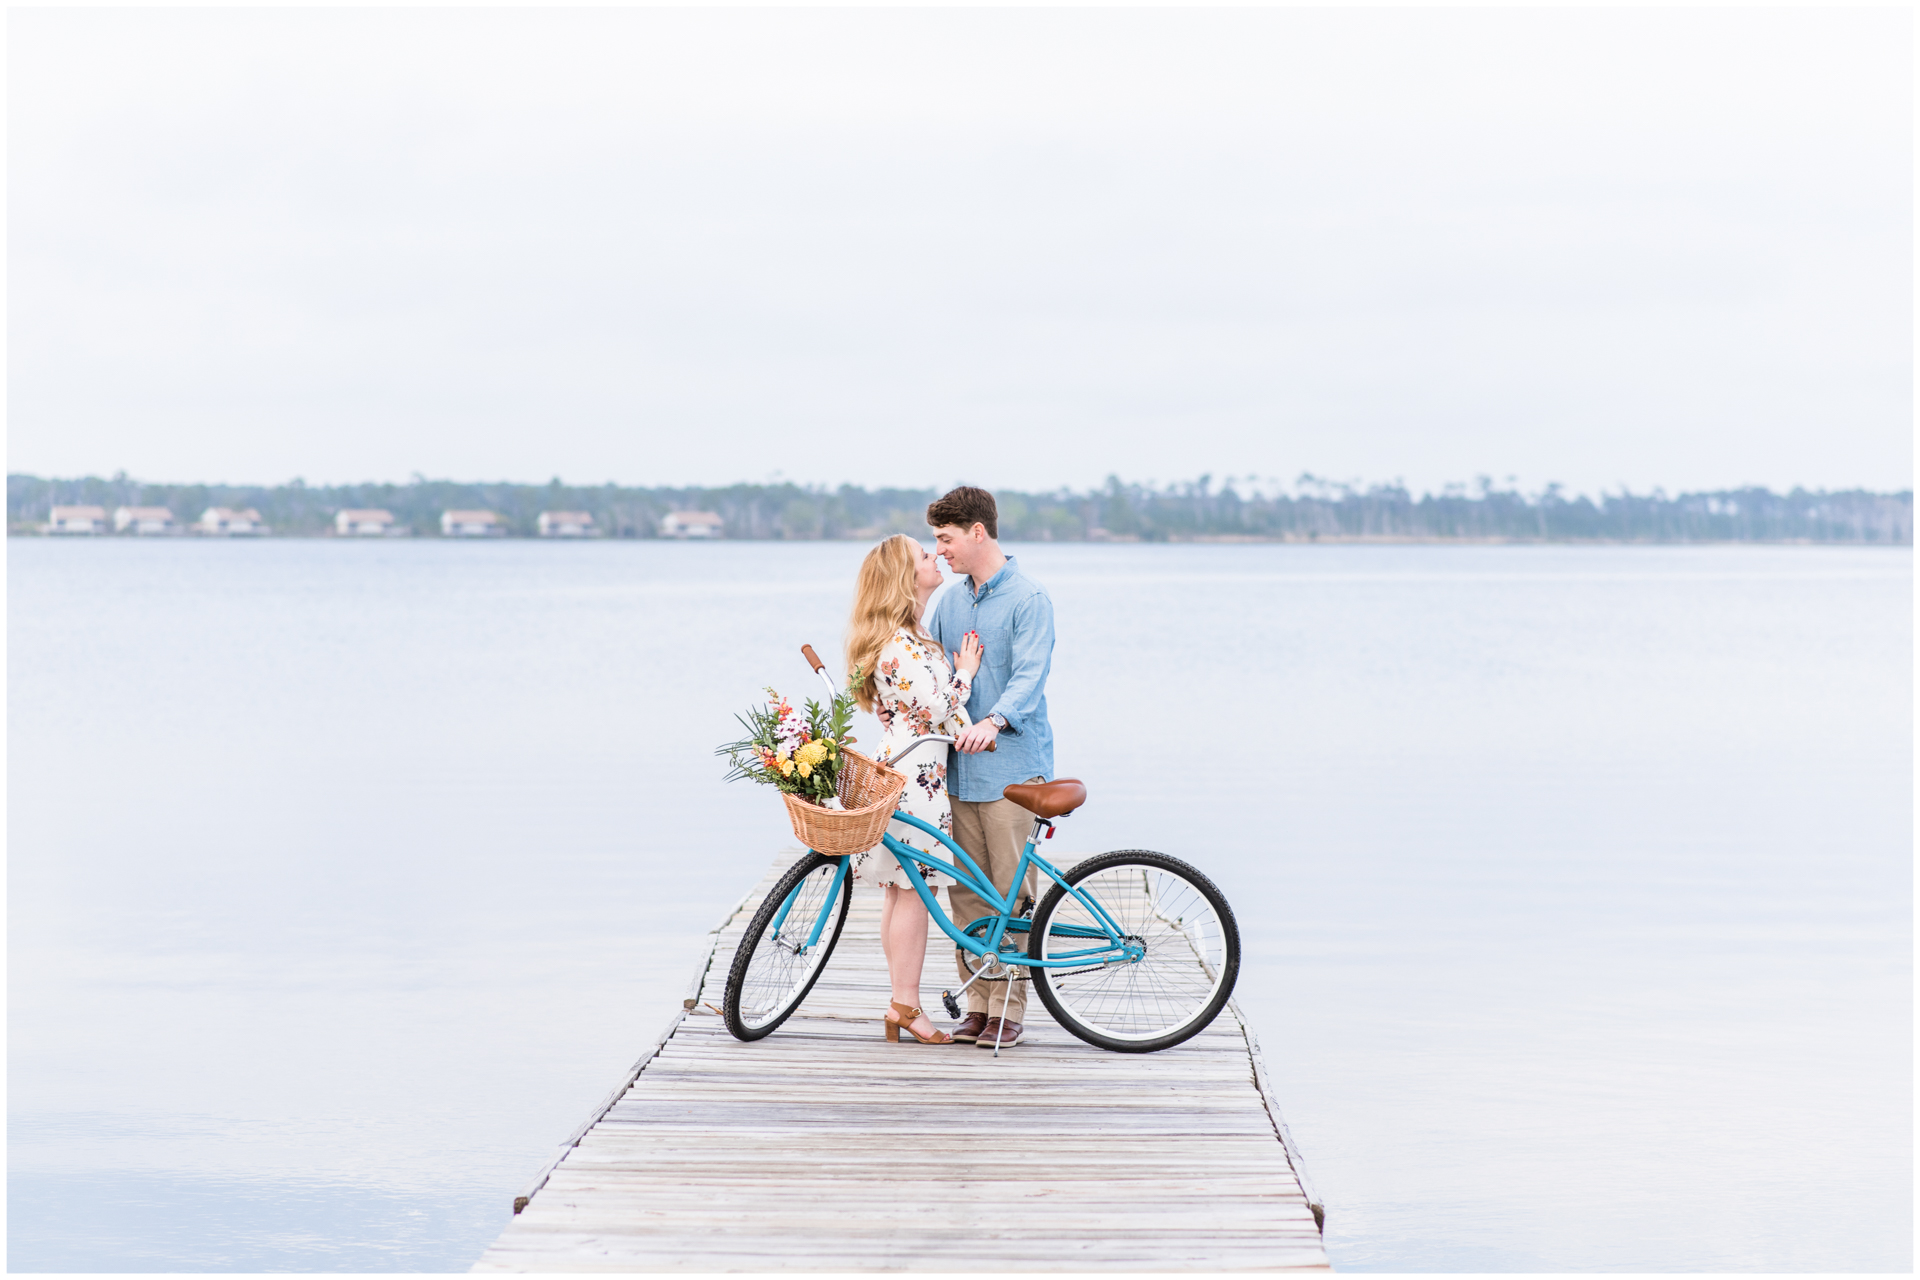 Twenty Oaks Photography - Huntsville Wedding Photographer - Gulf Shores Engagement Session with blue bike with basket of flowers